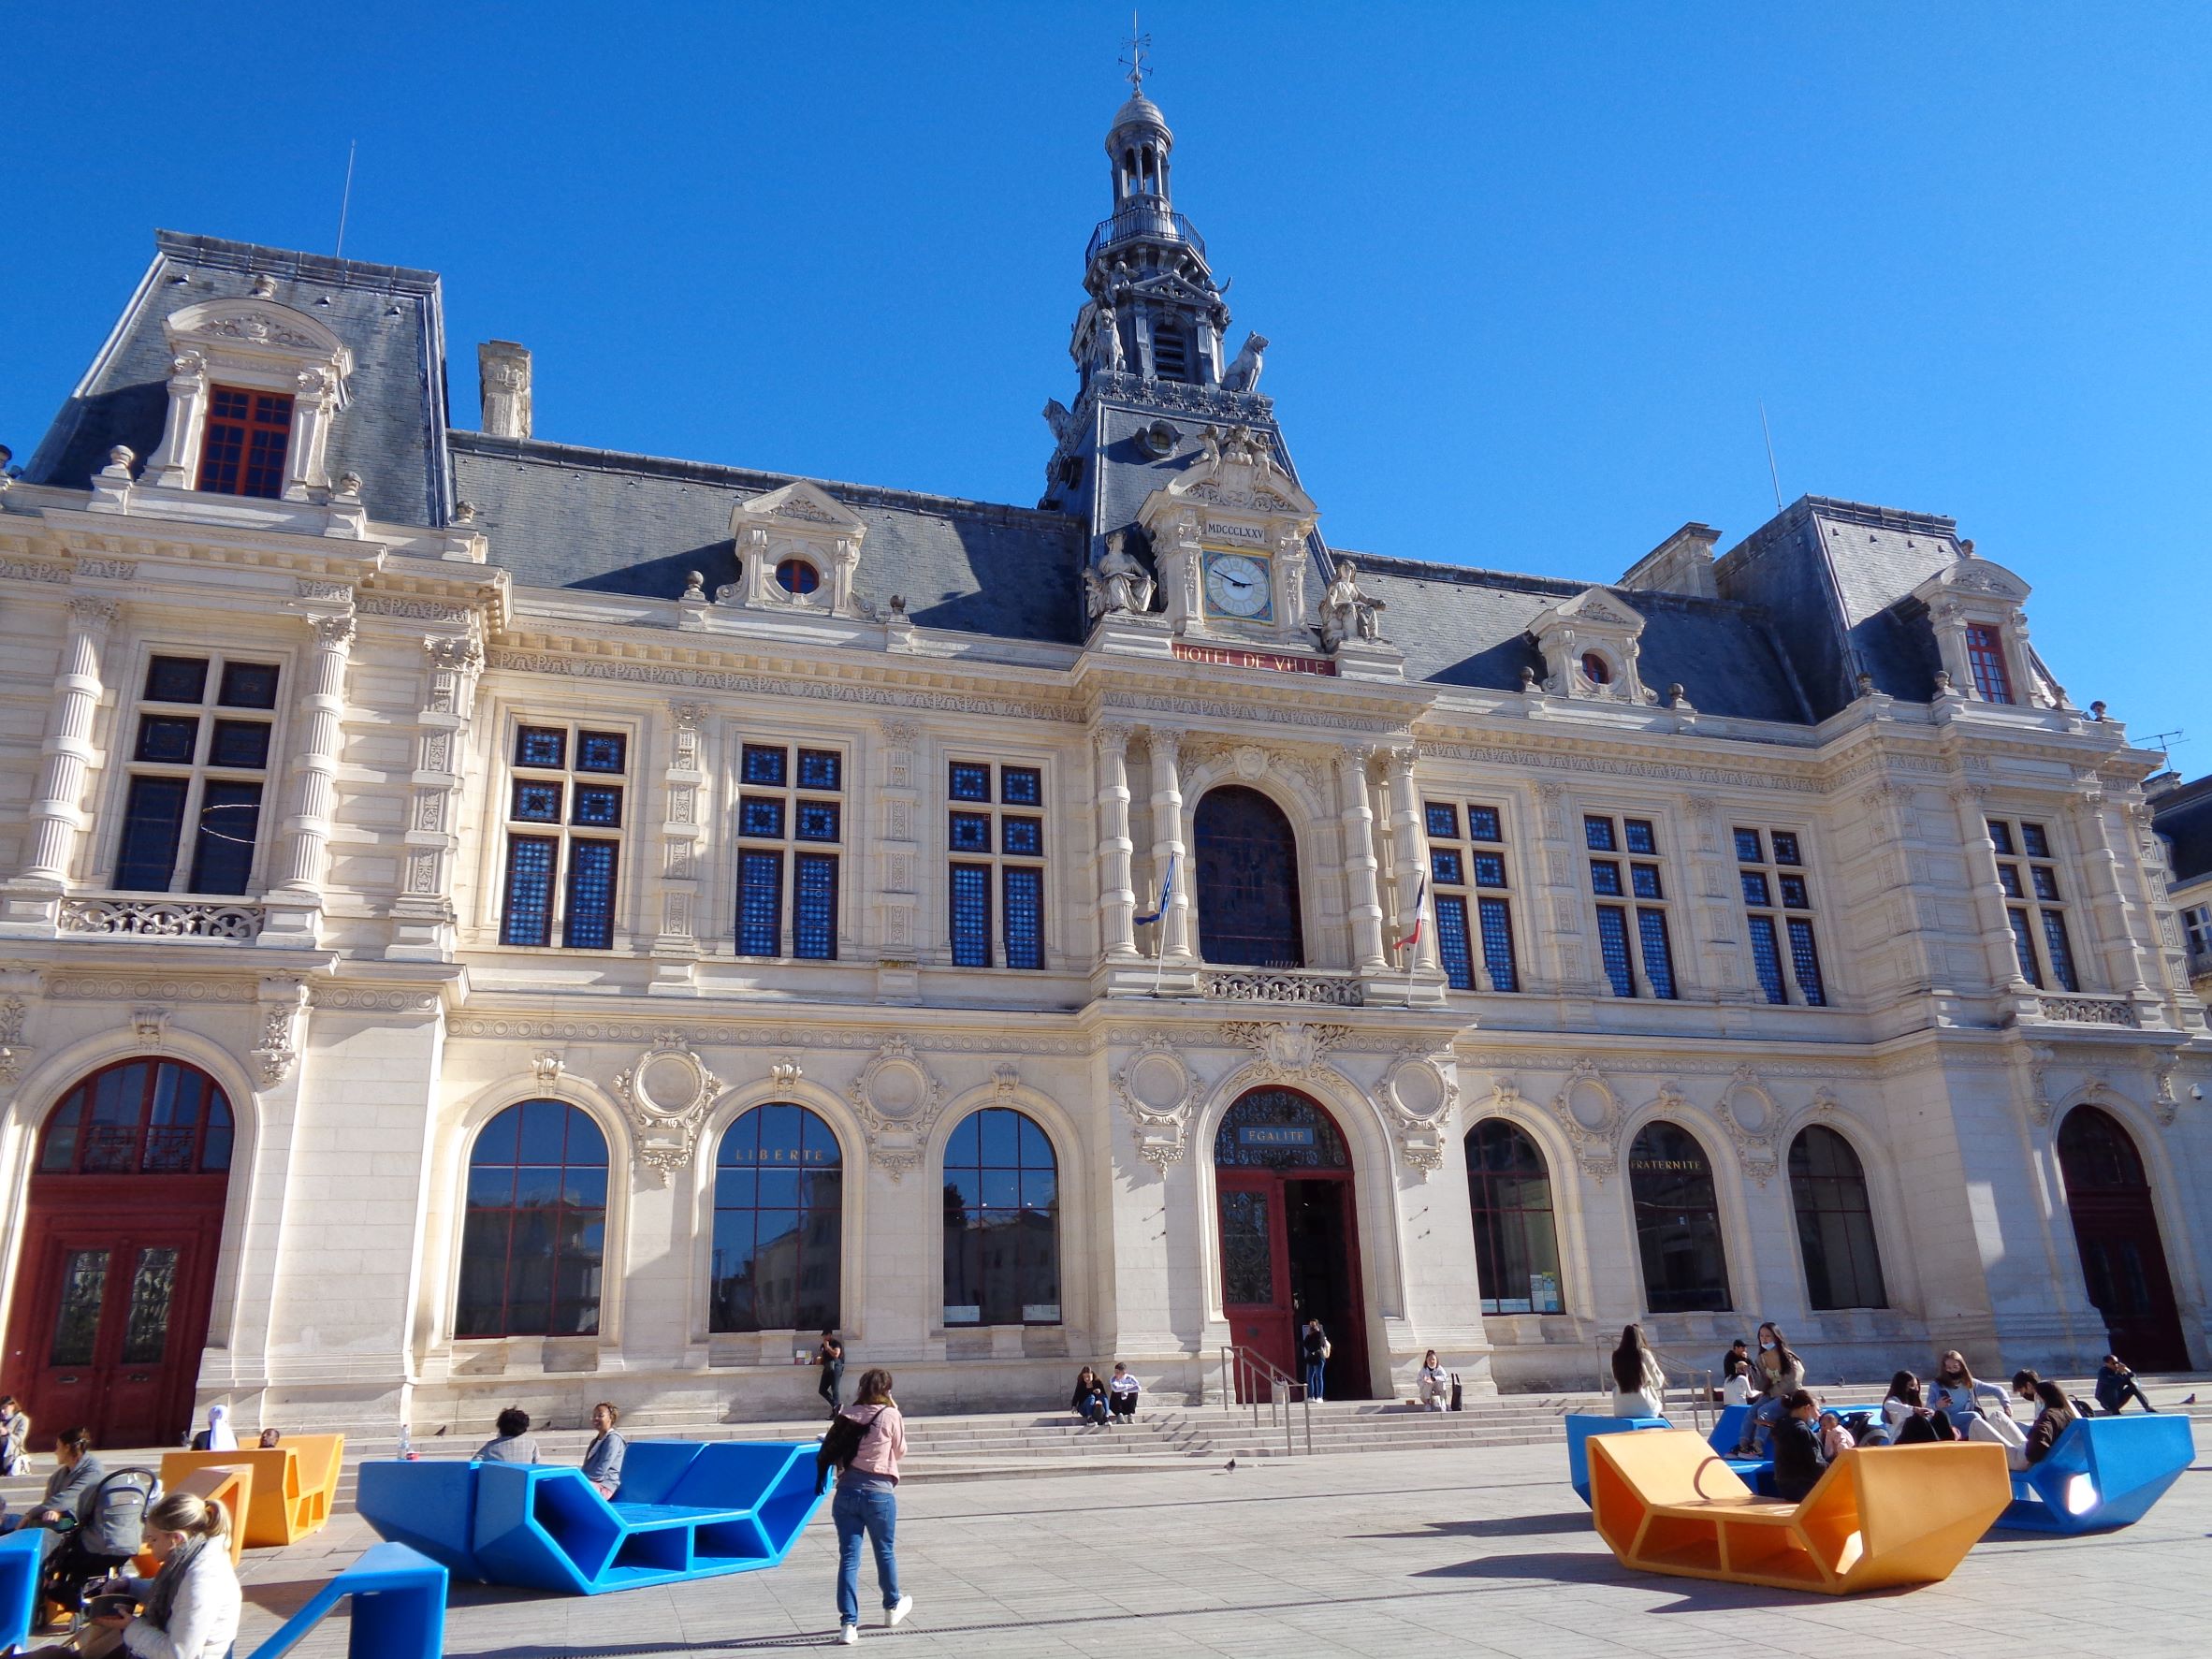 Poitiers hotel de ville front oct21